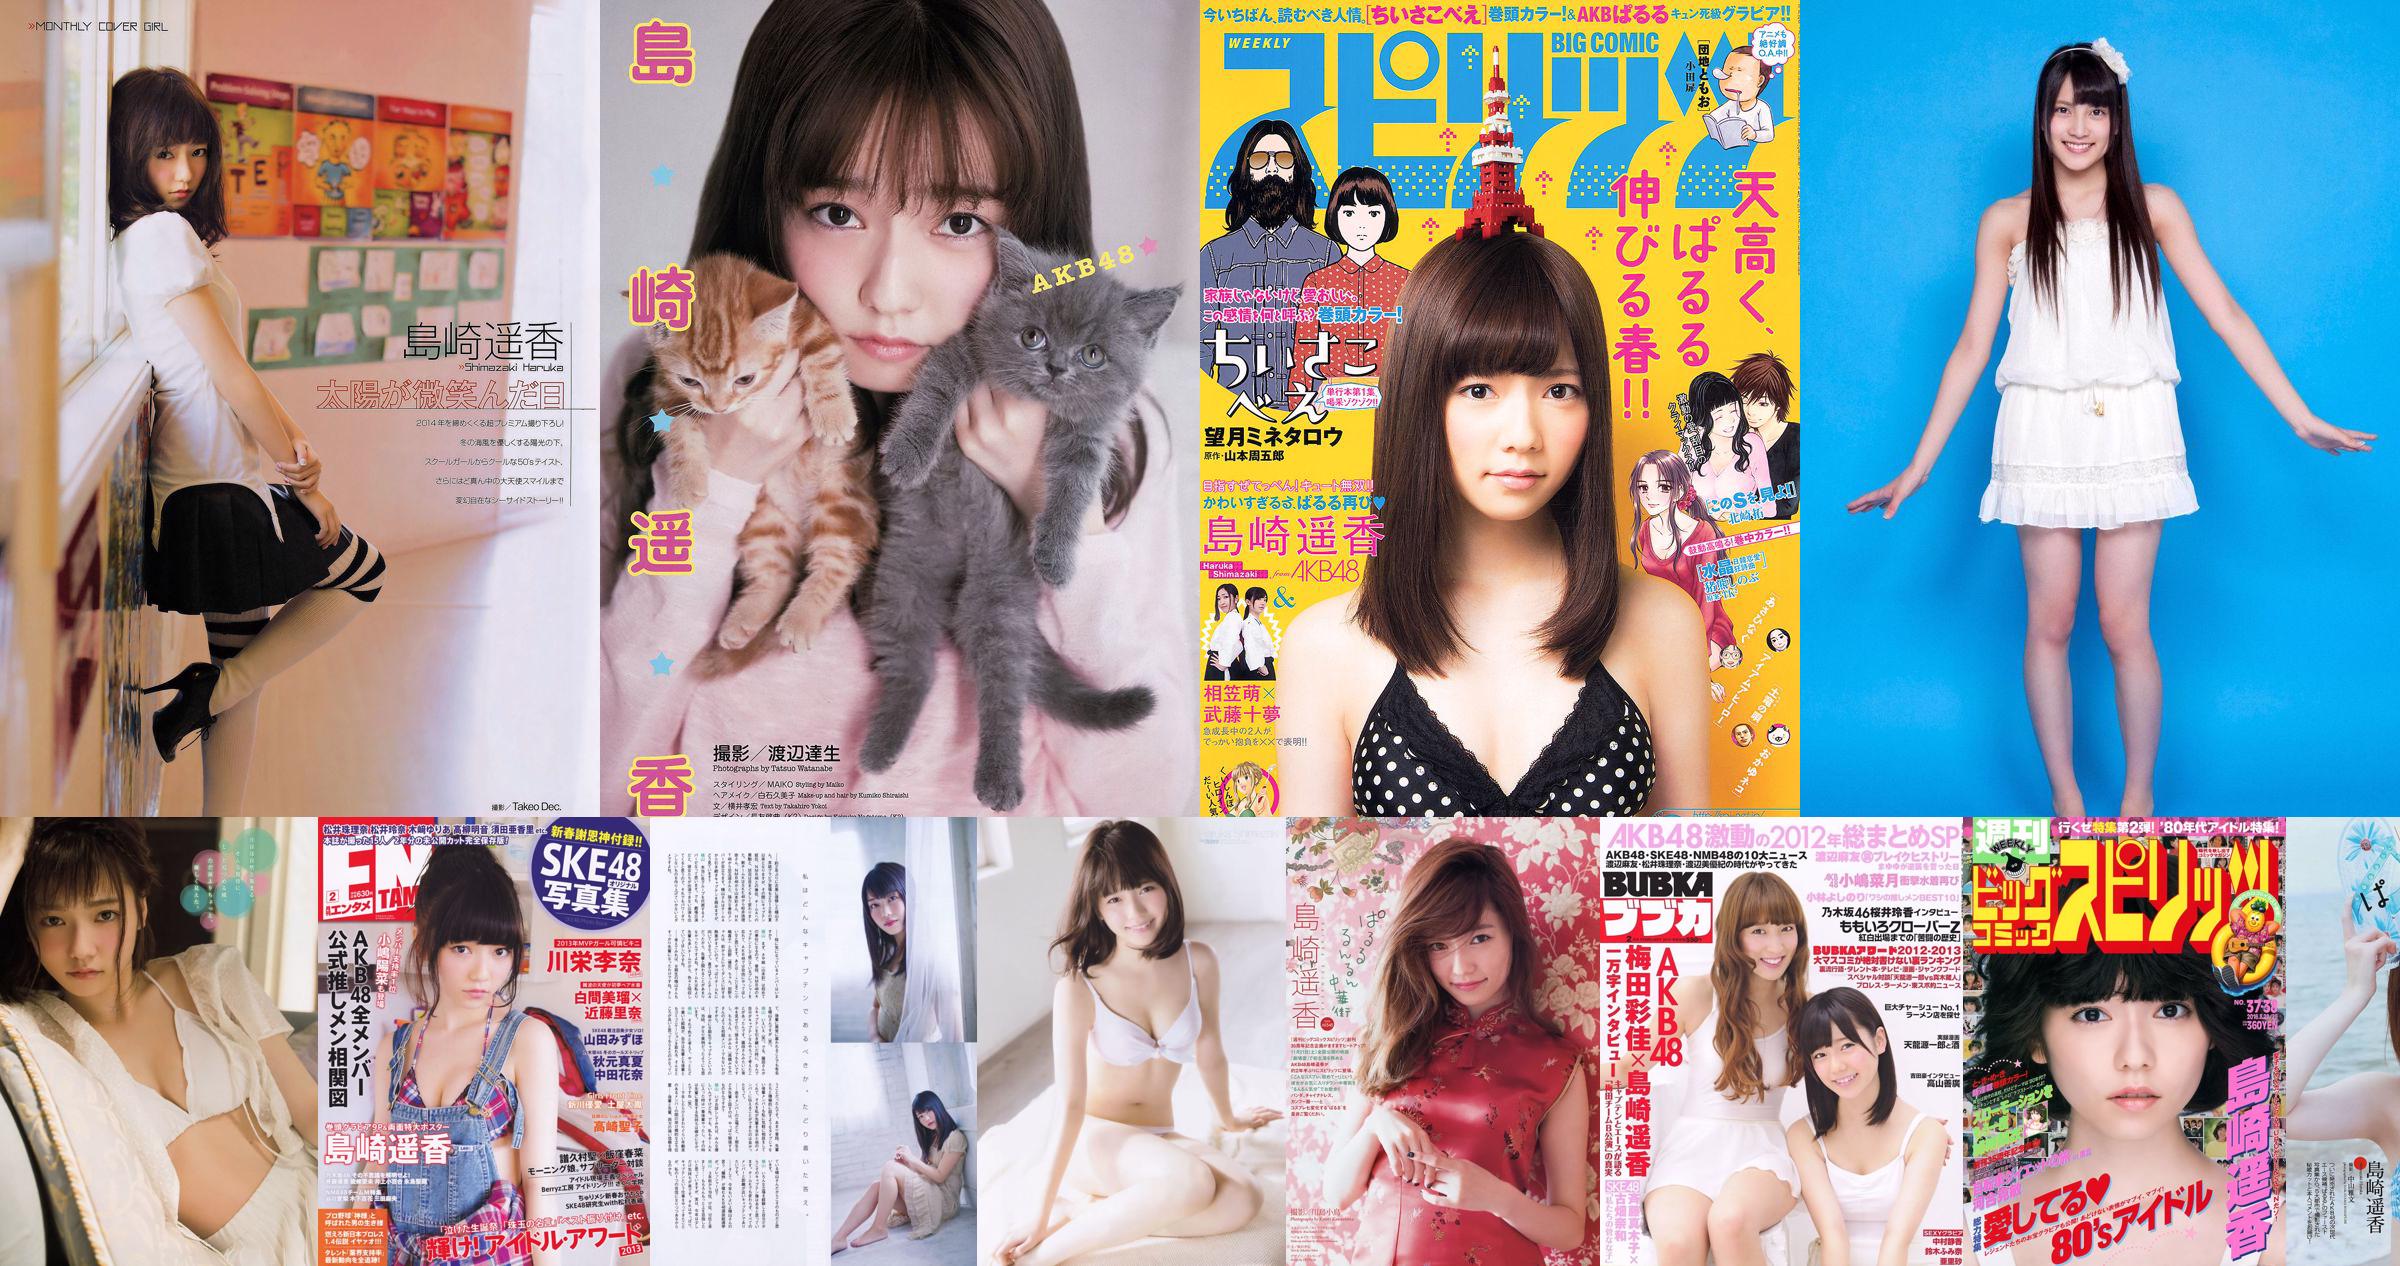 [Revista Young] Haruka Shimazaki 2014 Fotografia No.25 No.548ef6 Página 3